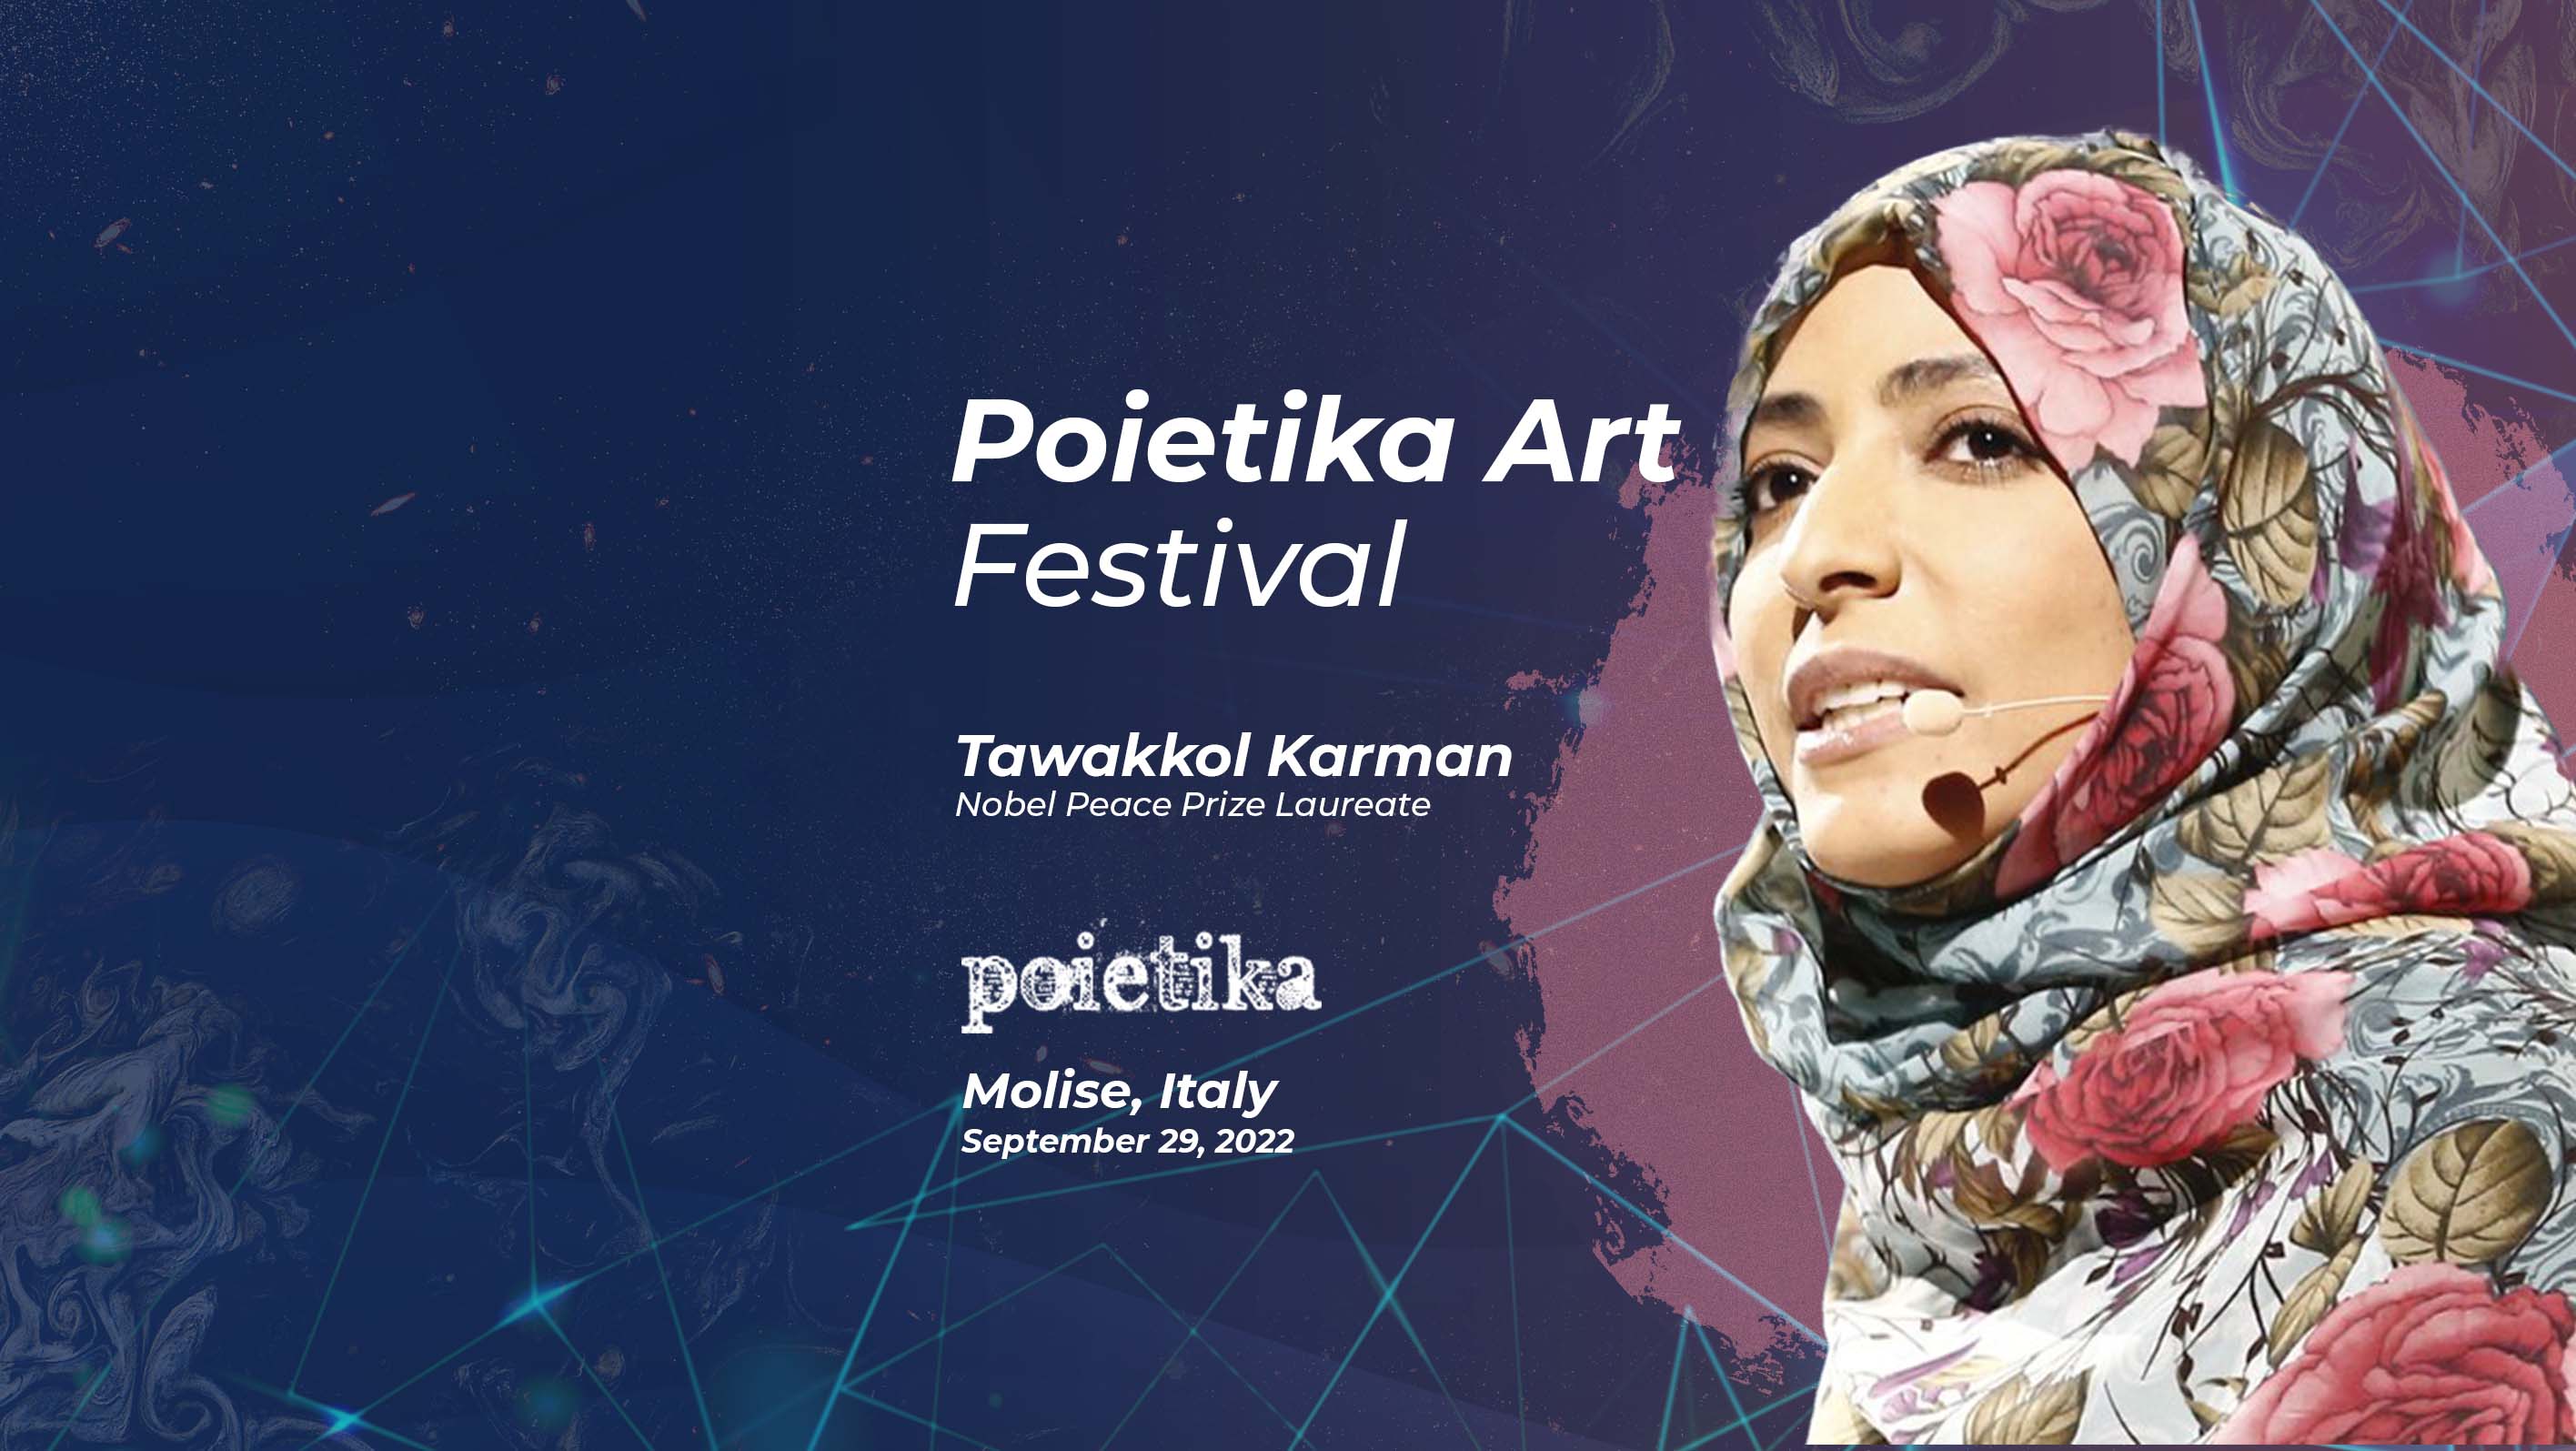 Tawakkol Karman heads to Italy to attend Poietika Art Festival